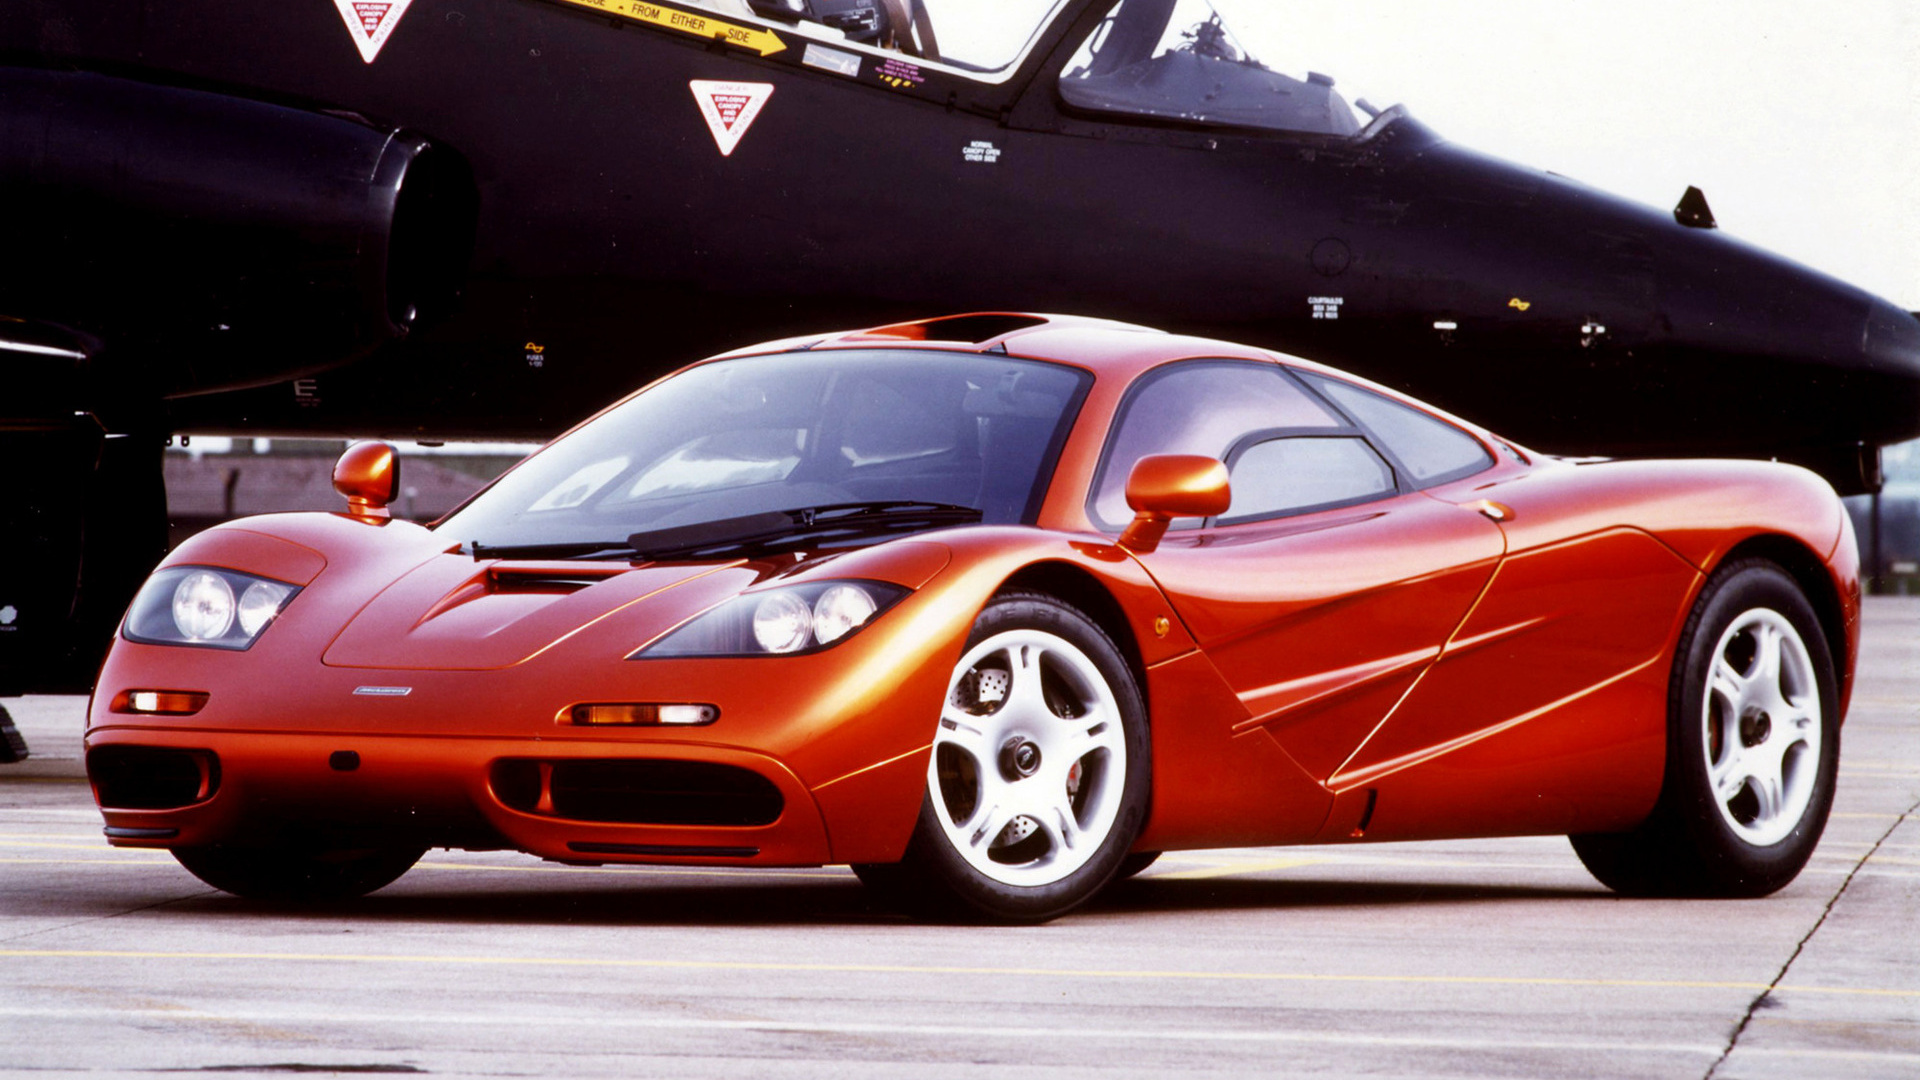 1993 McLaren F1 - Wallpapers and HD Images | Car Pixel